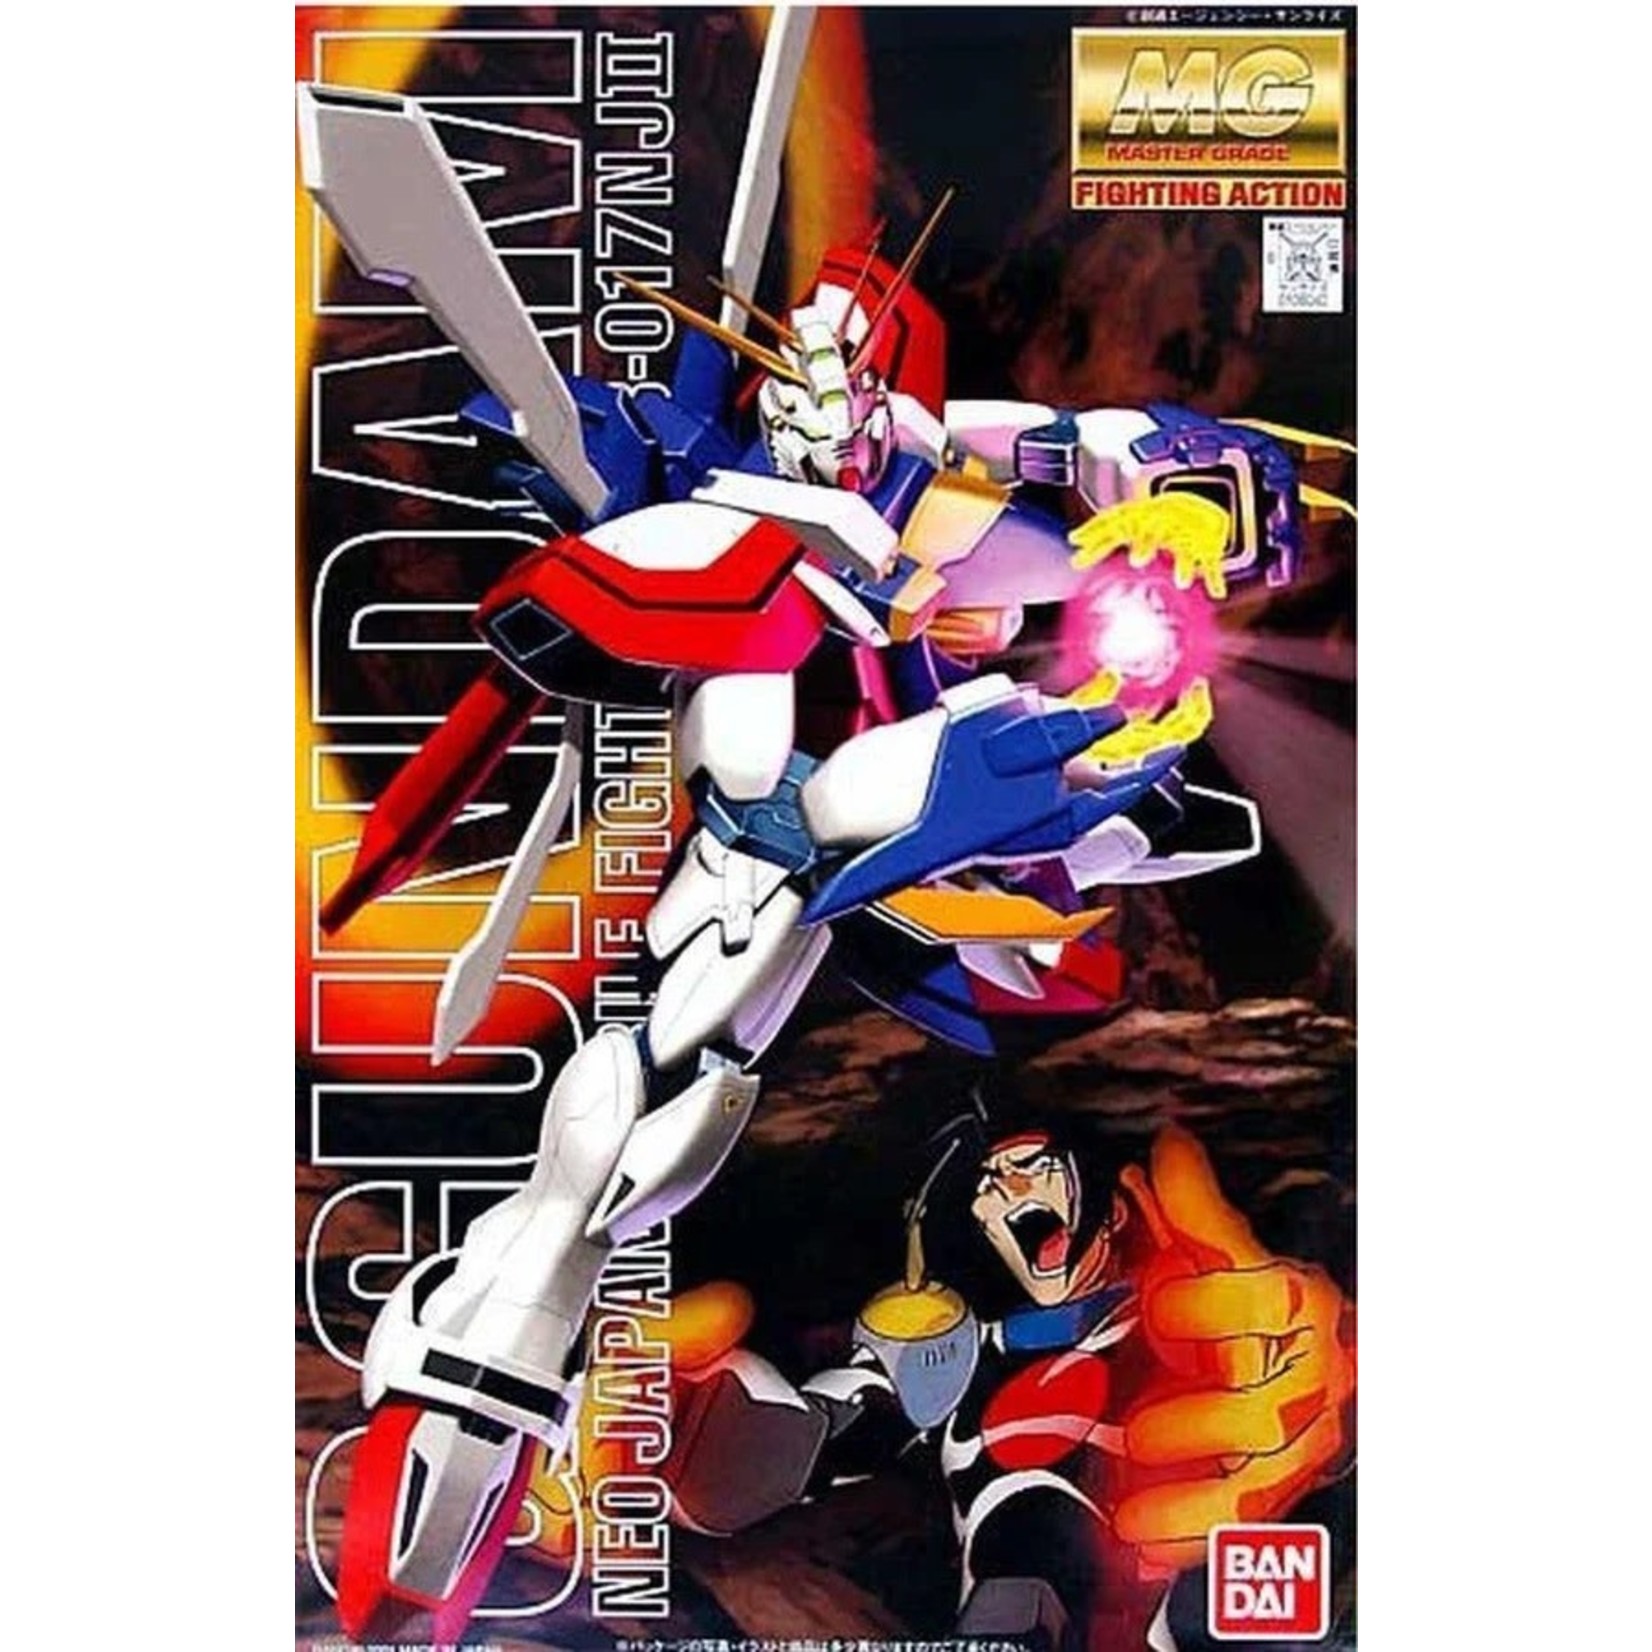 Bandai Bandai 1106042 MG God Gundam G Gundam